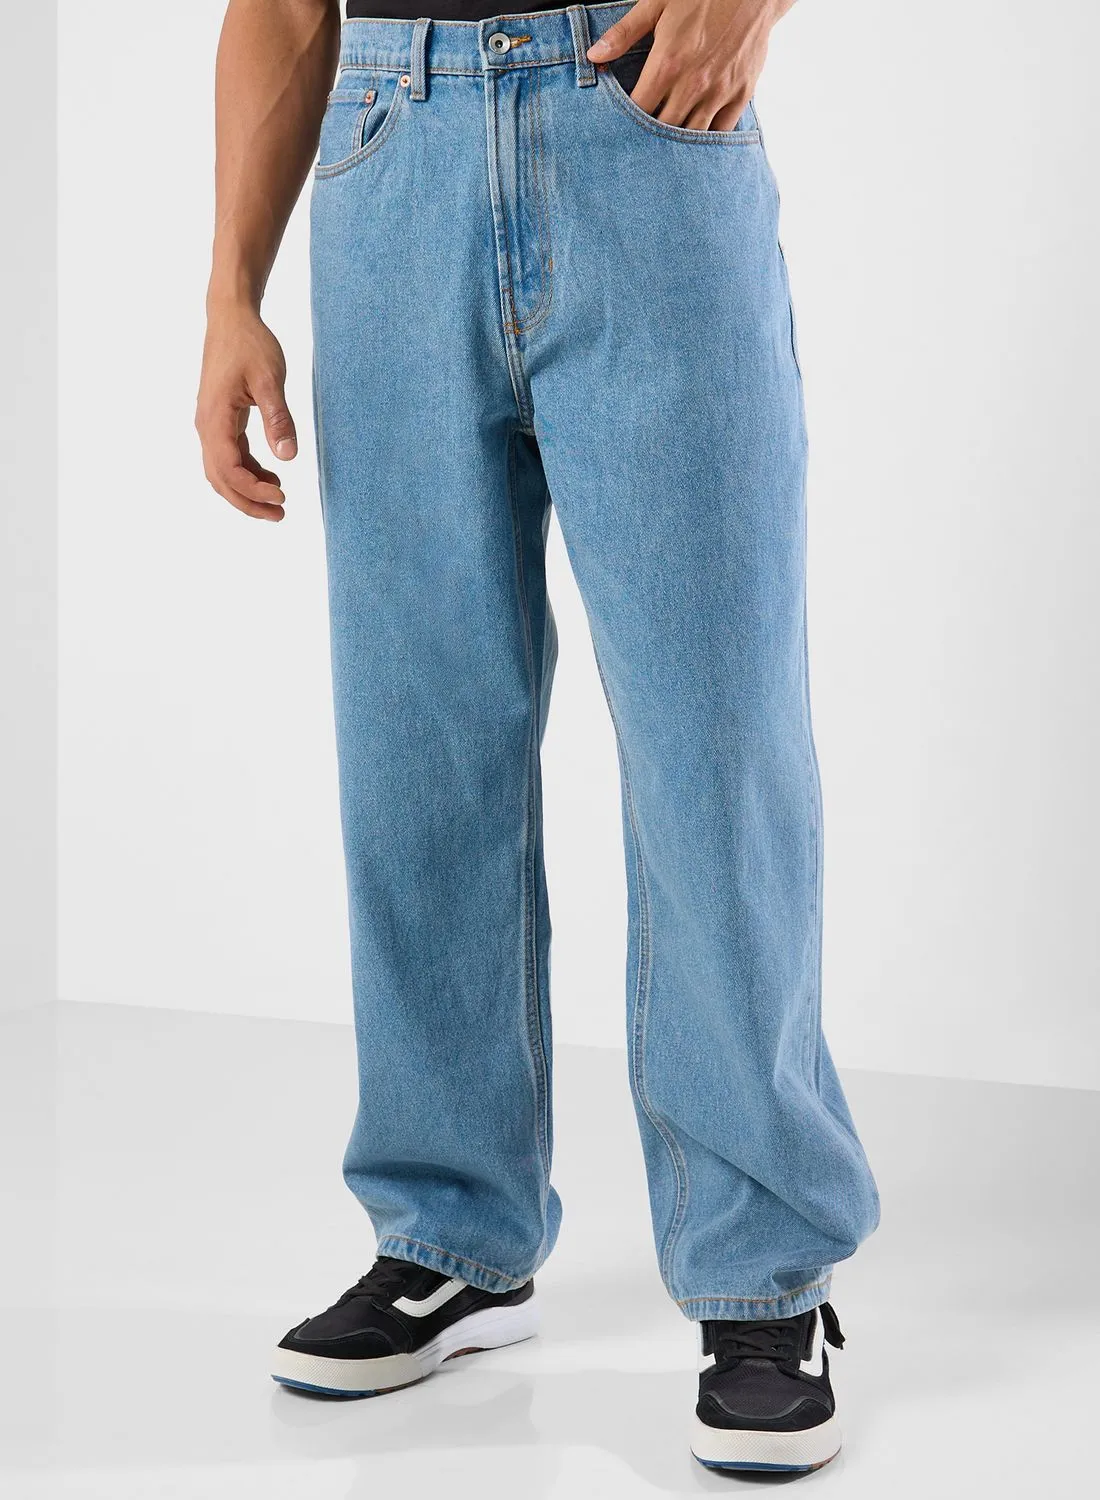 VANS Check 5 Baggy Denim Jeans